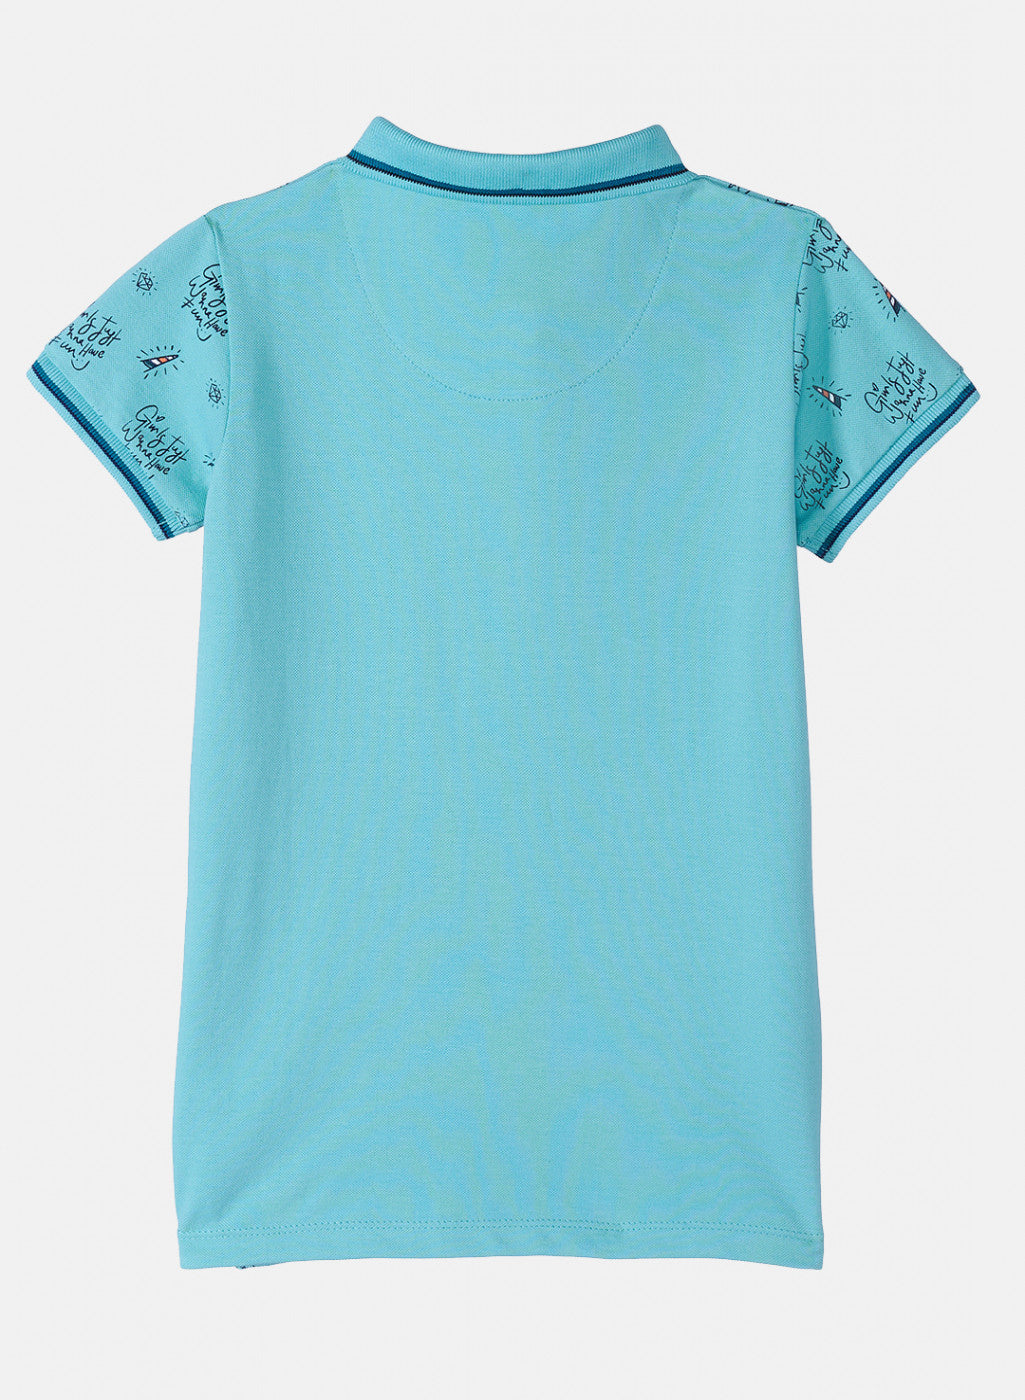 Girls Blue Printed T-Shirt